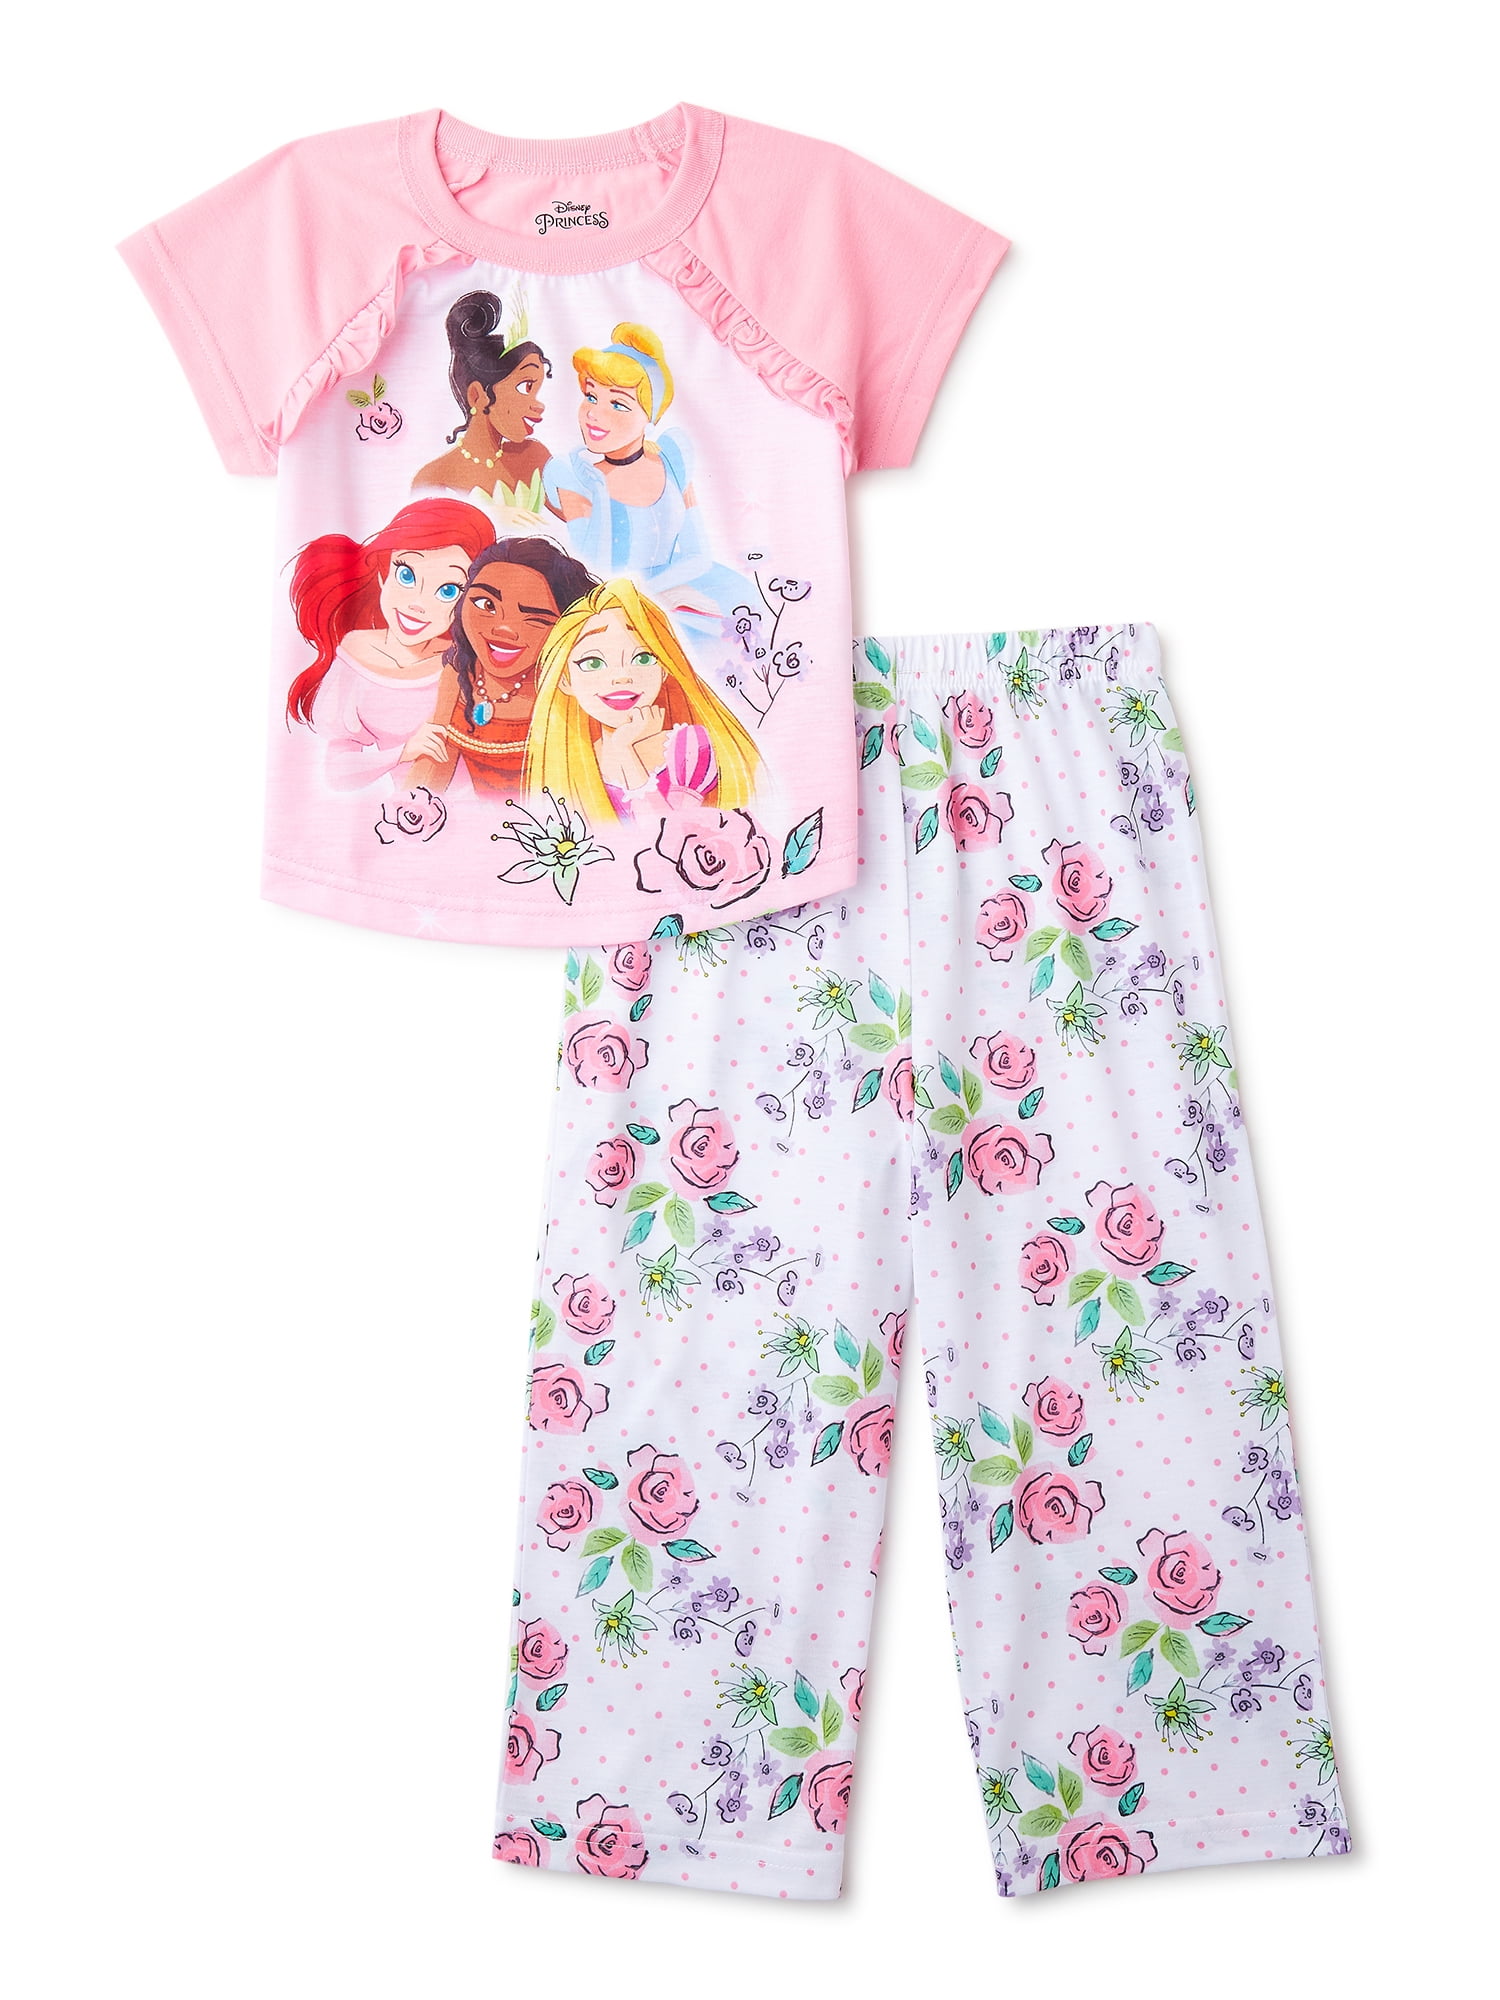 Pijama set pijama chica disney doc McStuffins tamaño 98 104 110 116 #162 